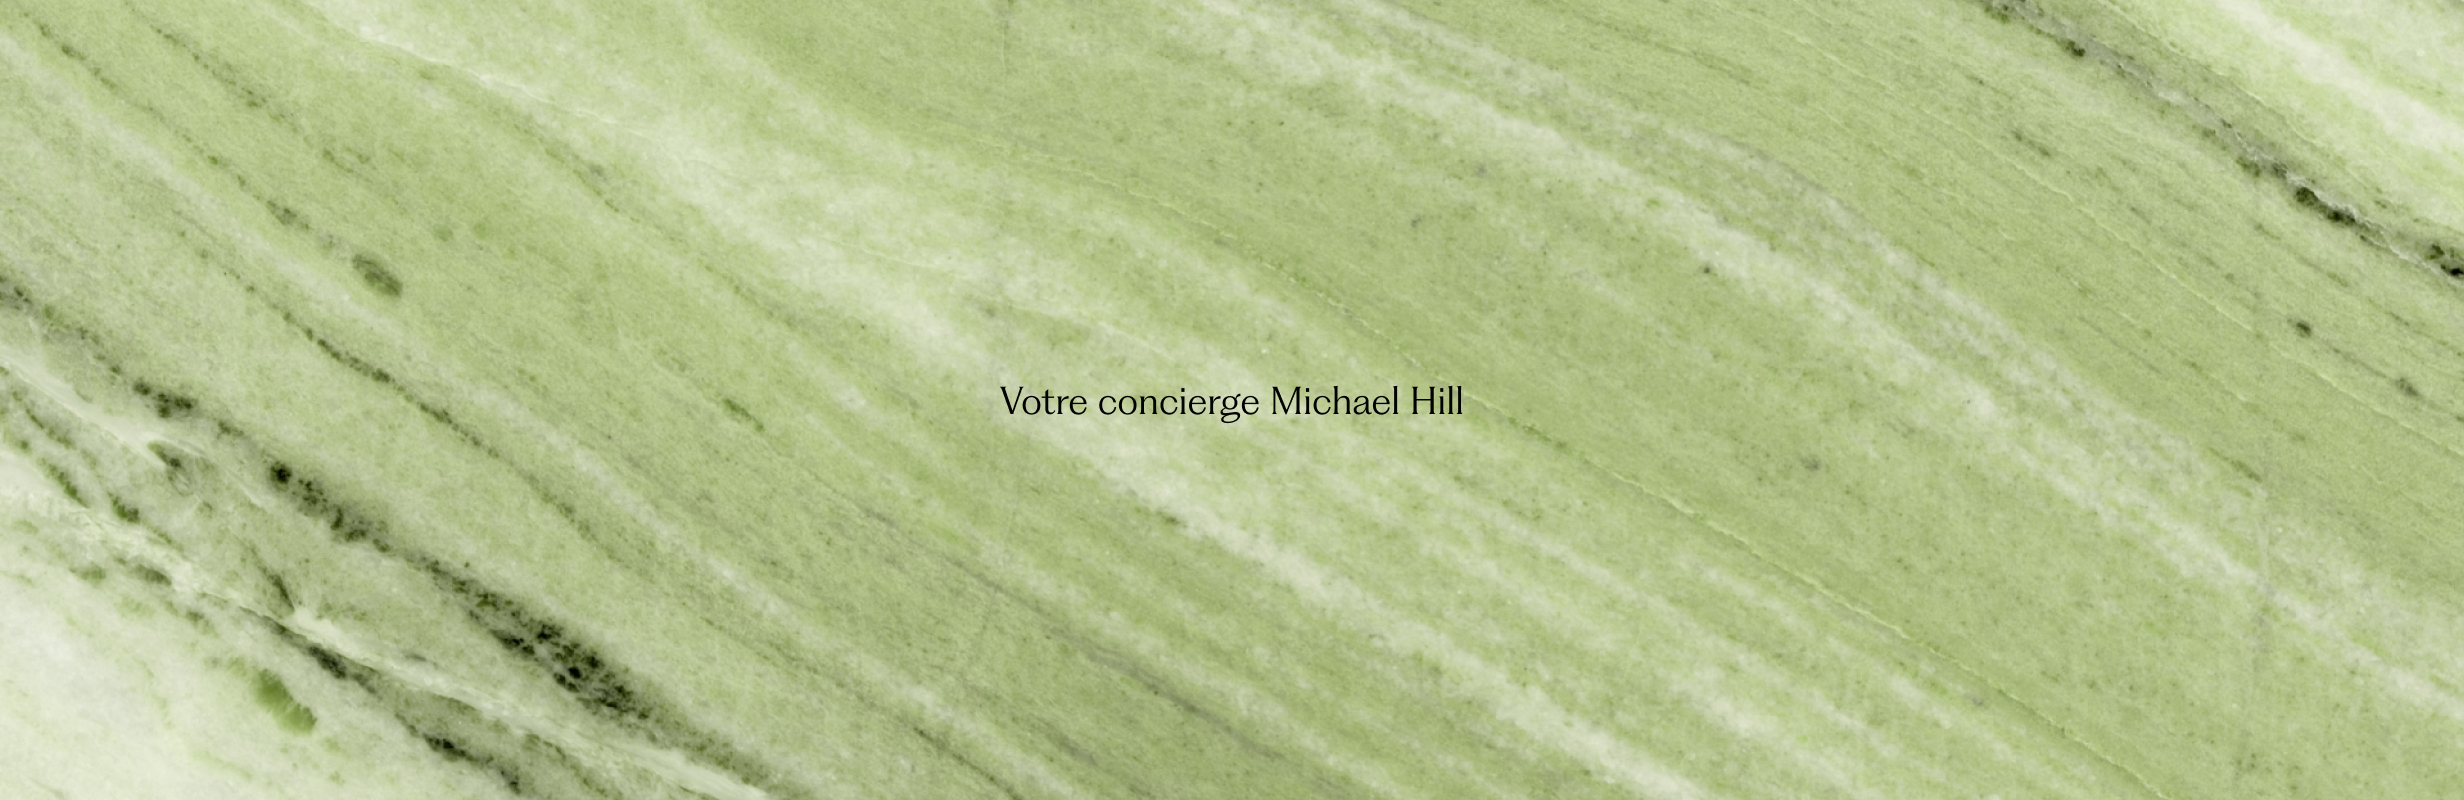 GLOBAL - Michael Hill Concierge - Hero IMG